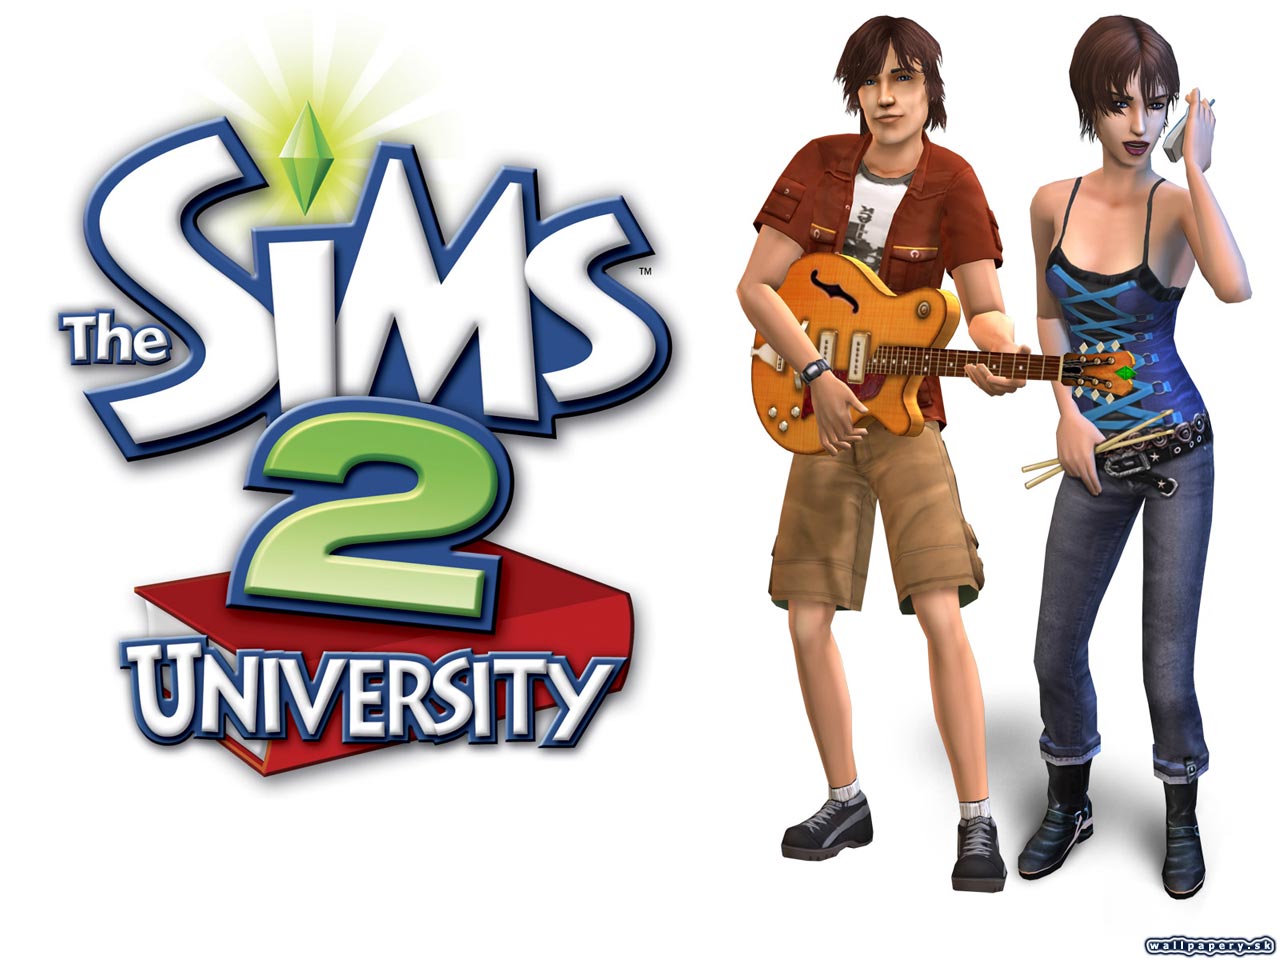 The Sims 2: University - wallpaper 8